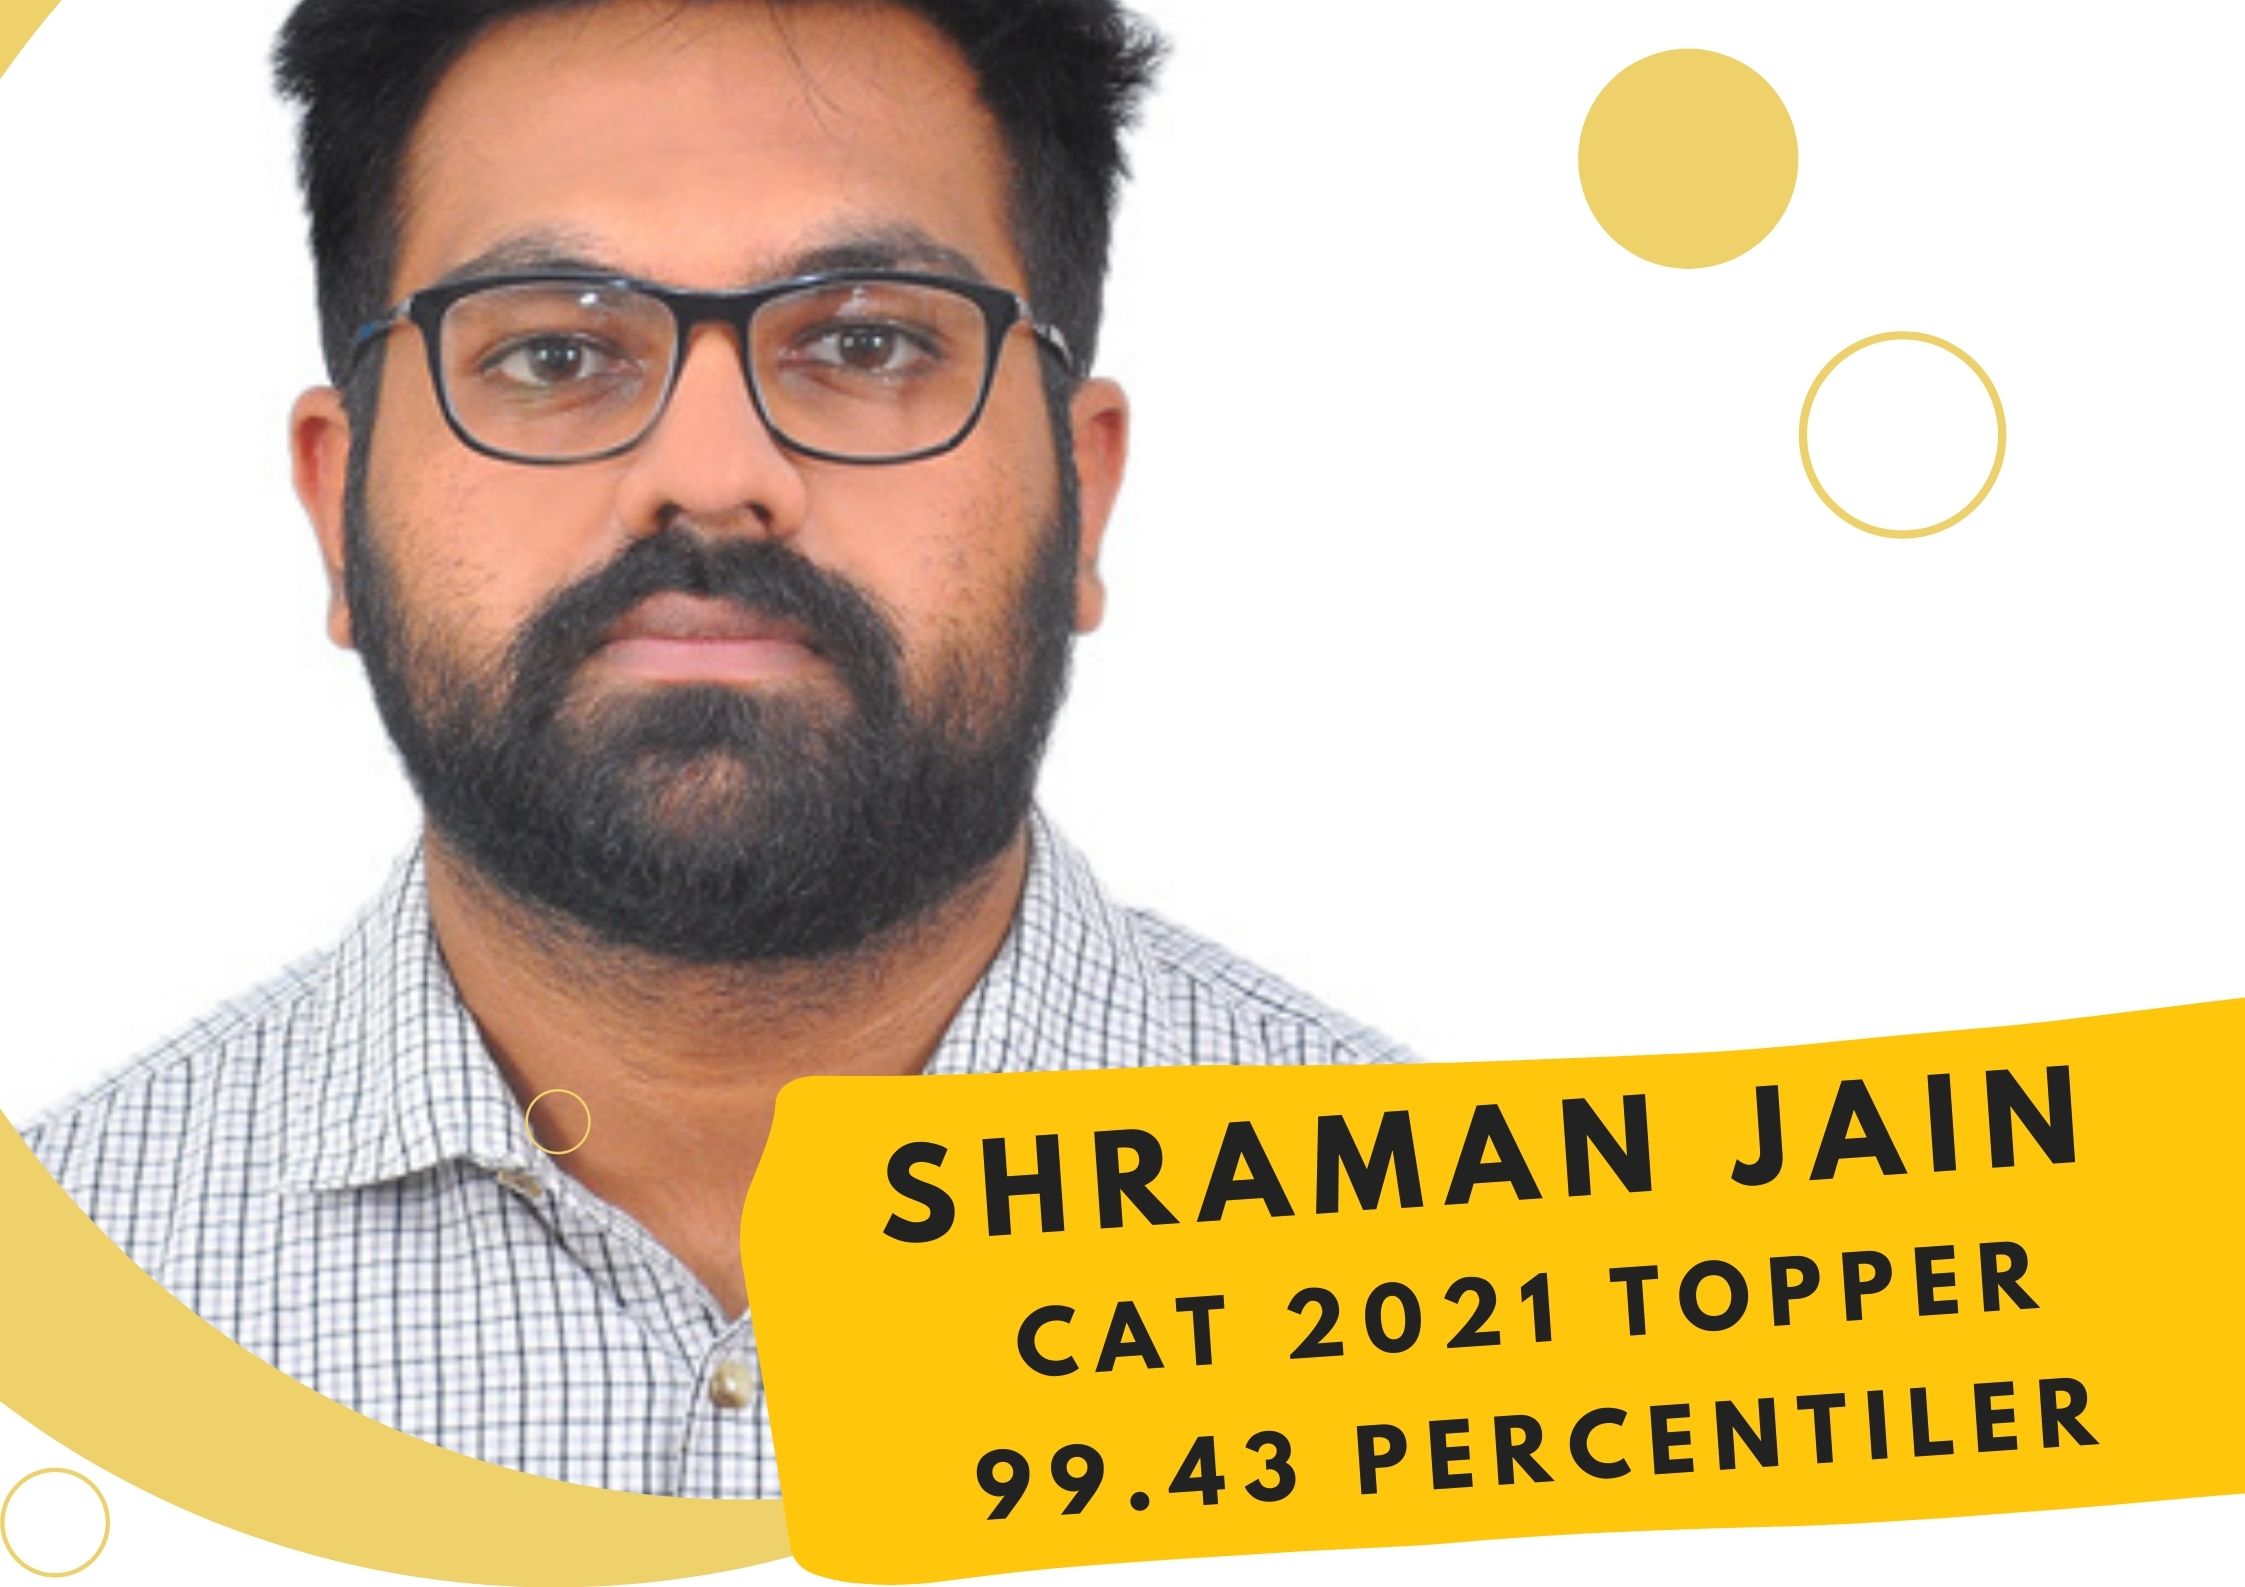 CAT 2021 Topper Interview: Shraman Jain (99.43 Percentiler) 